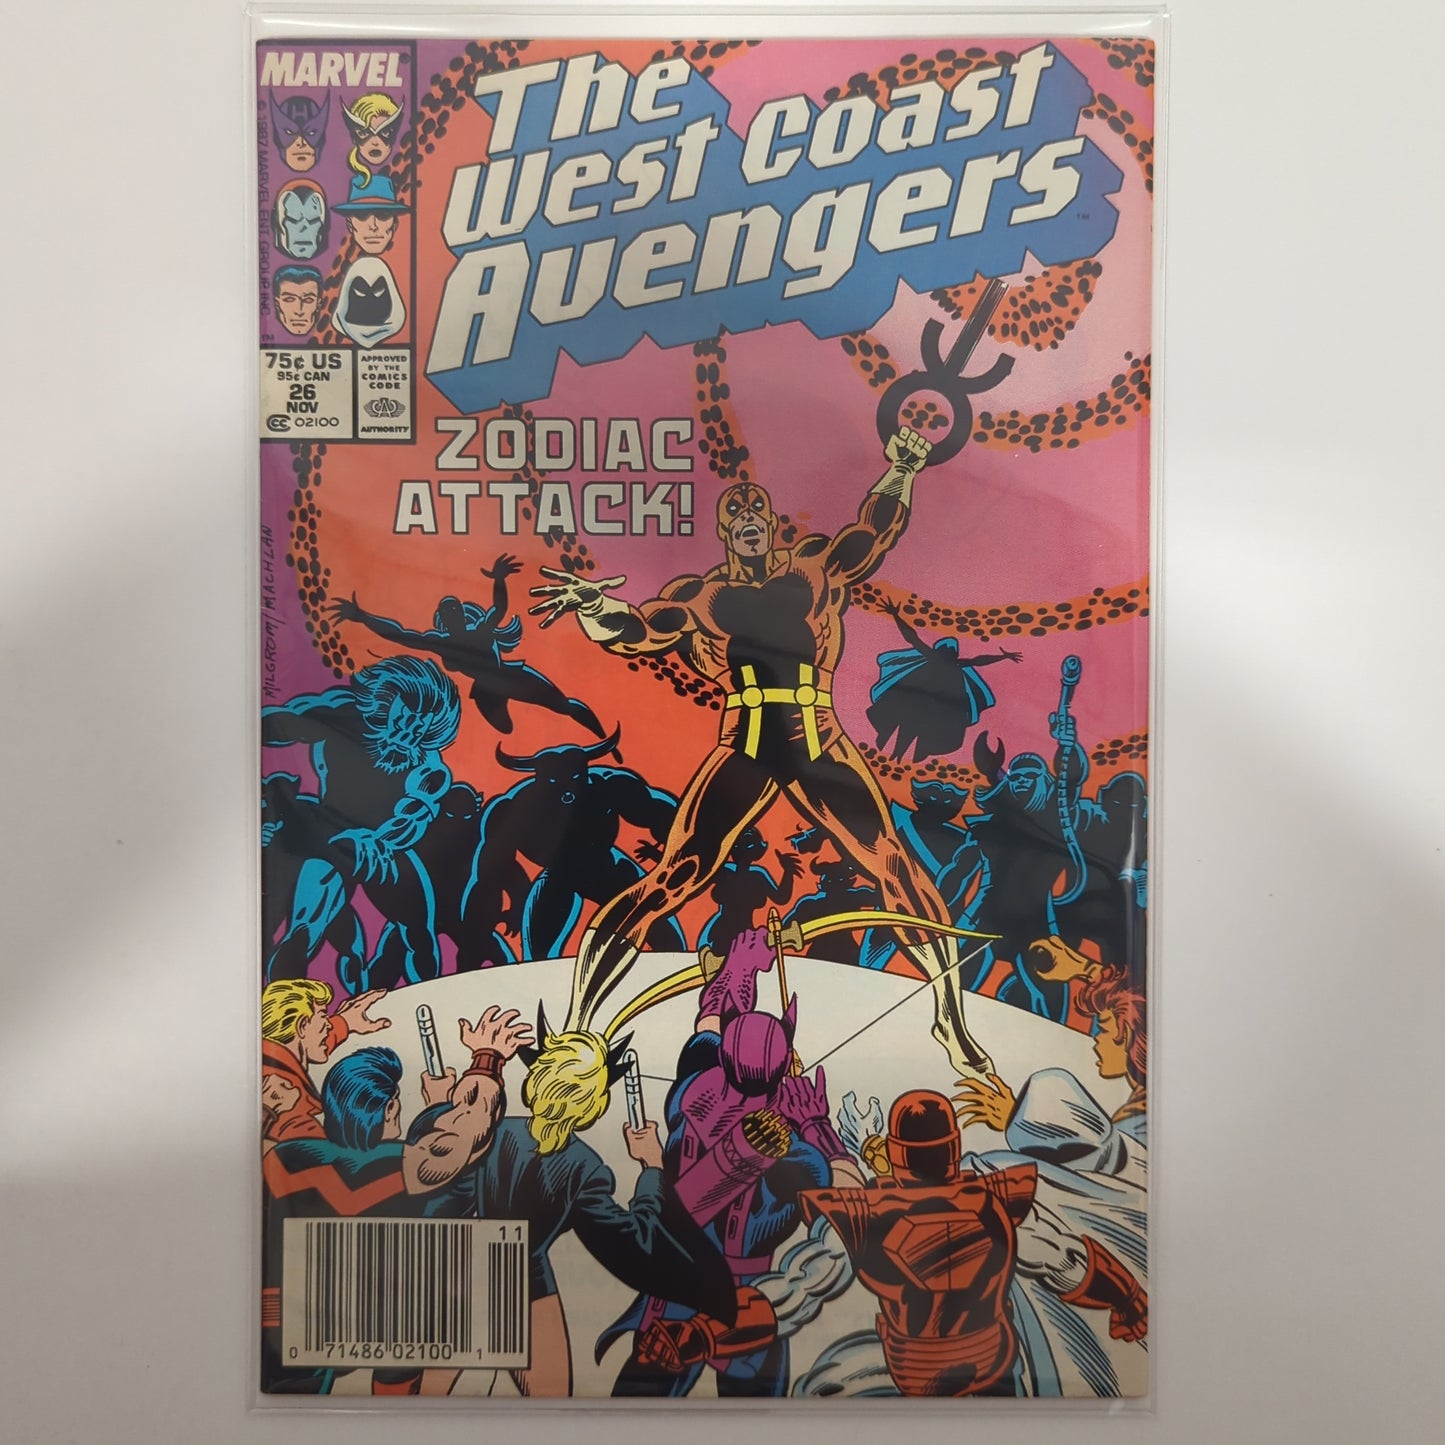 The West Coast Avengers #26 Newsstand